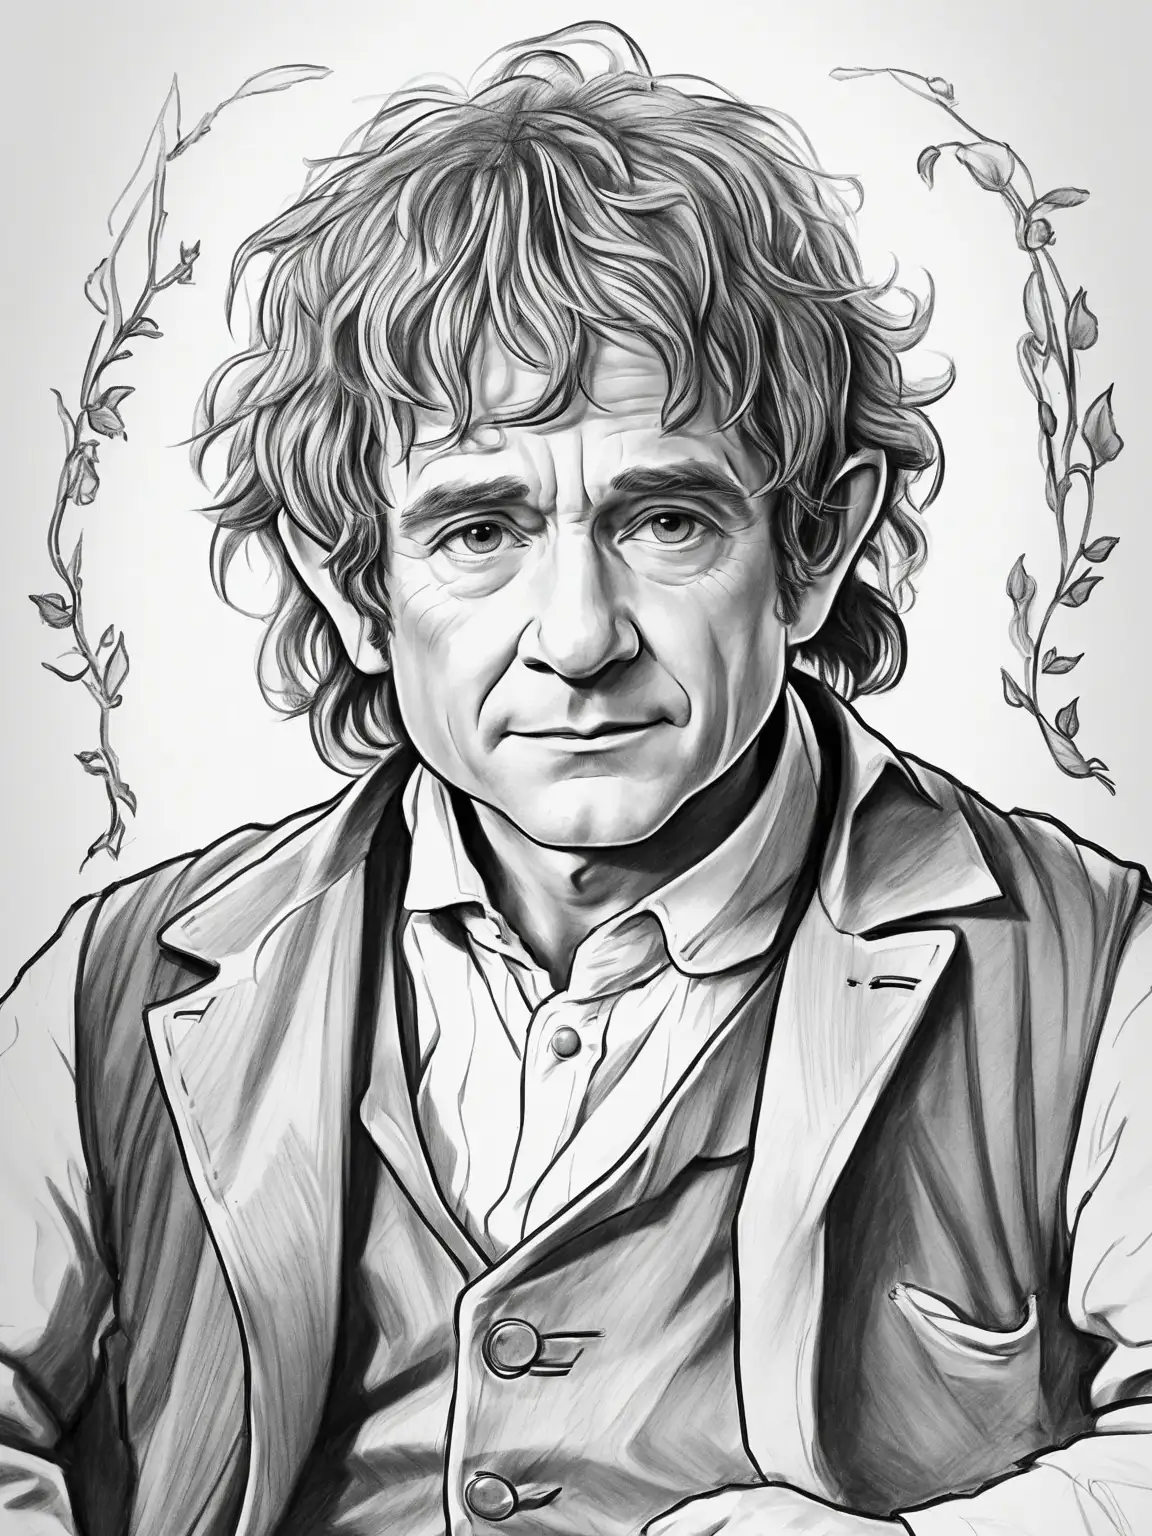 Página para colorear de Bilbo Bolsón para imprimir gratis